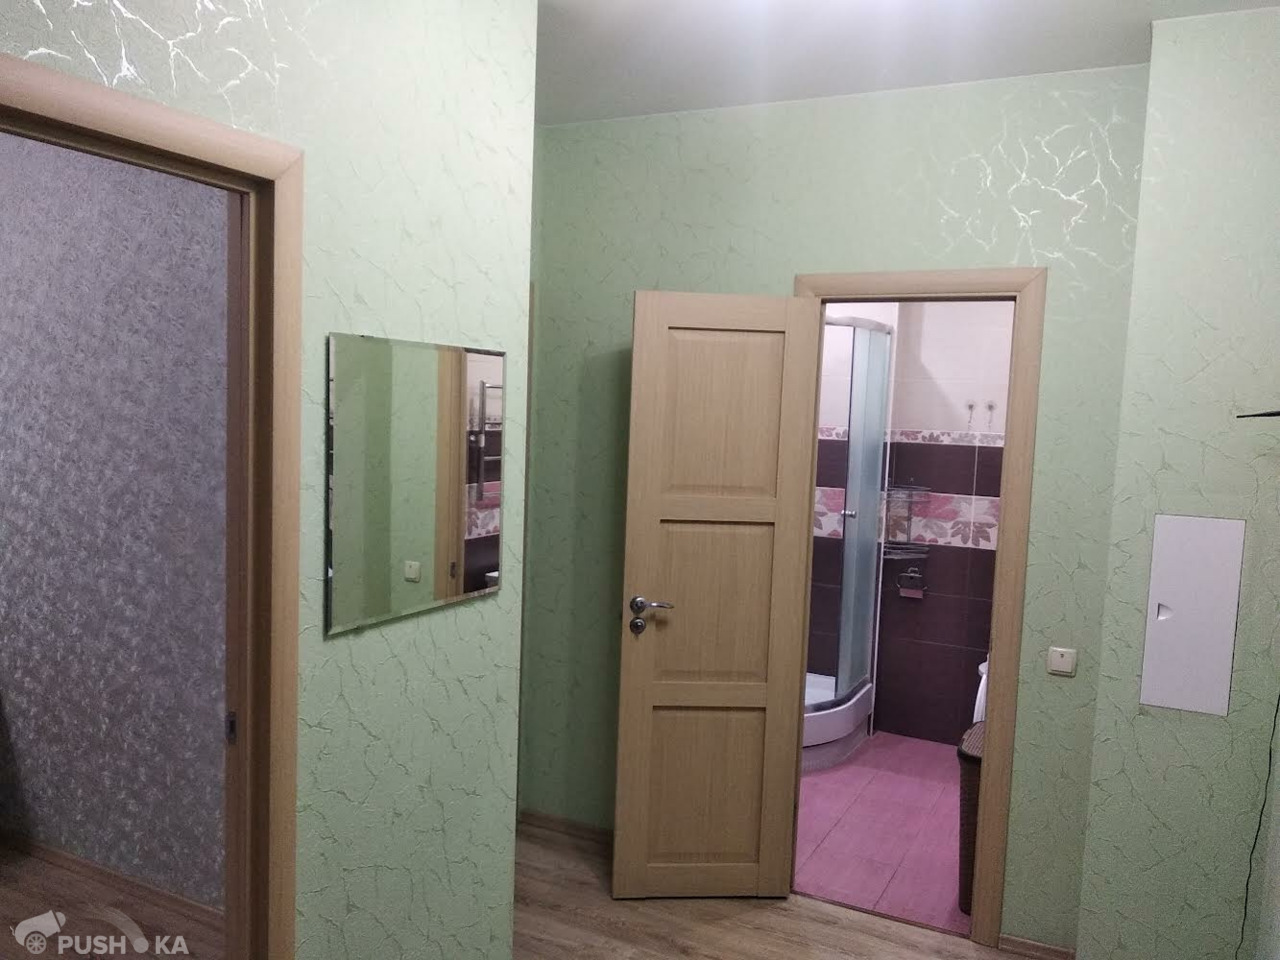 Продаётся 1-комнатная квартира 42.4 кв.м. этаж 11/12 за 6 150 000 руб 